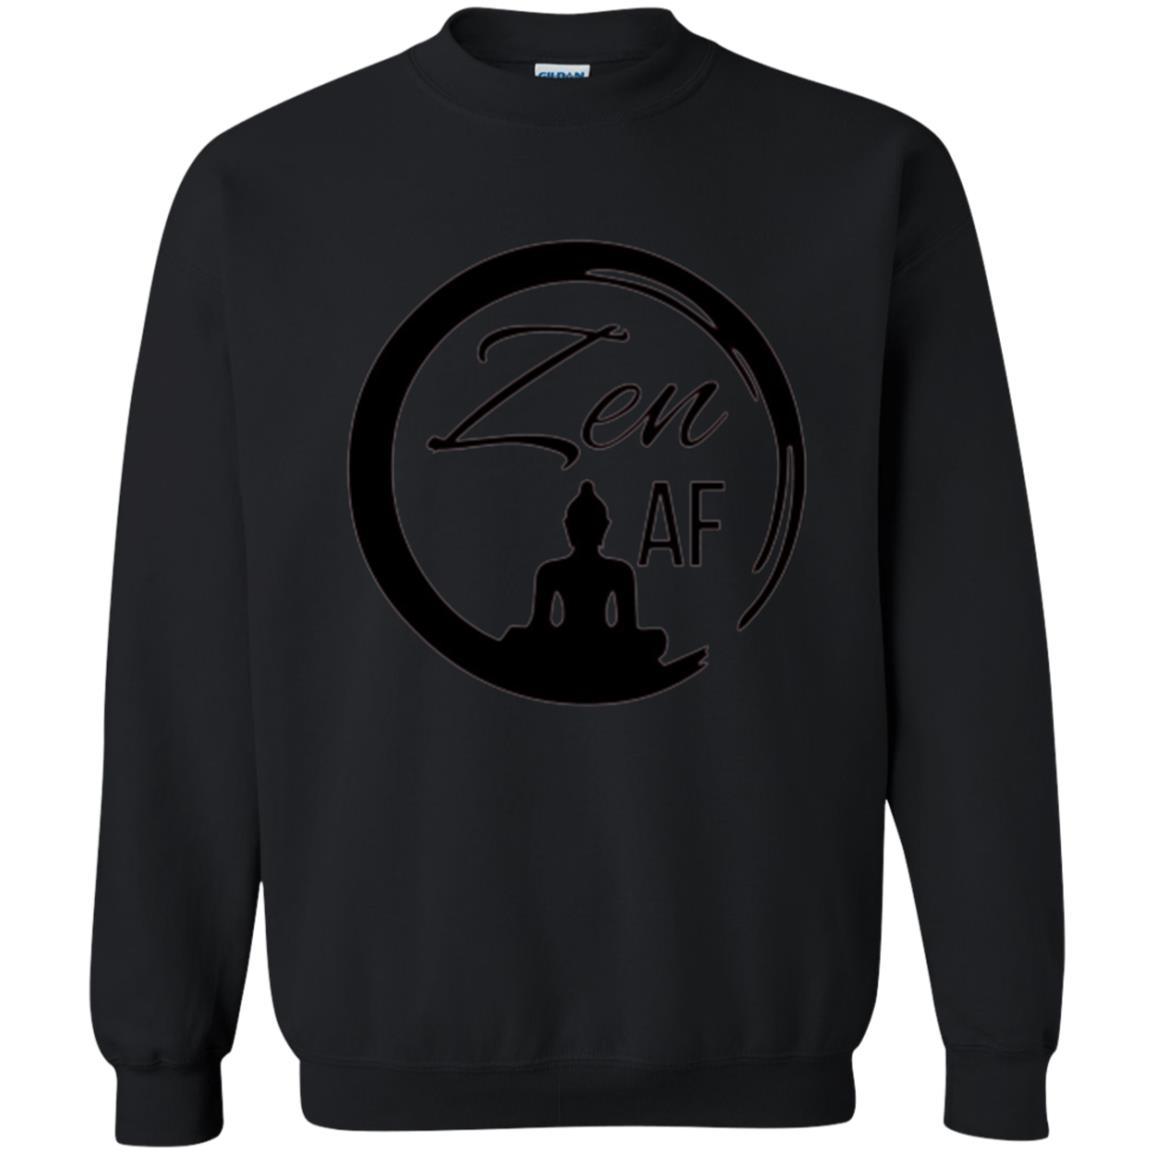 Zen Af Yoga Graphic T-shirt